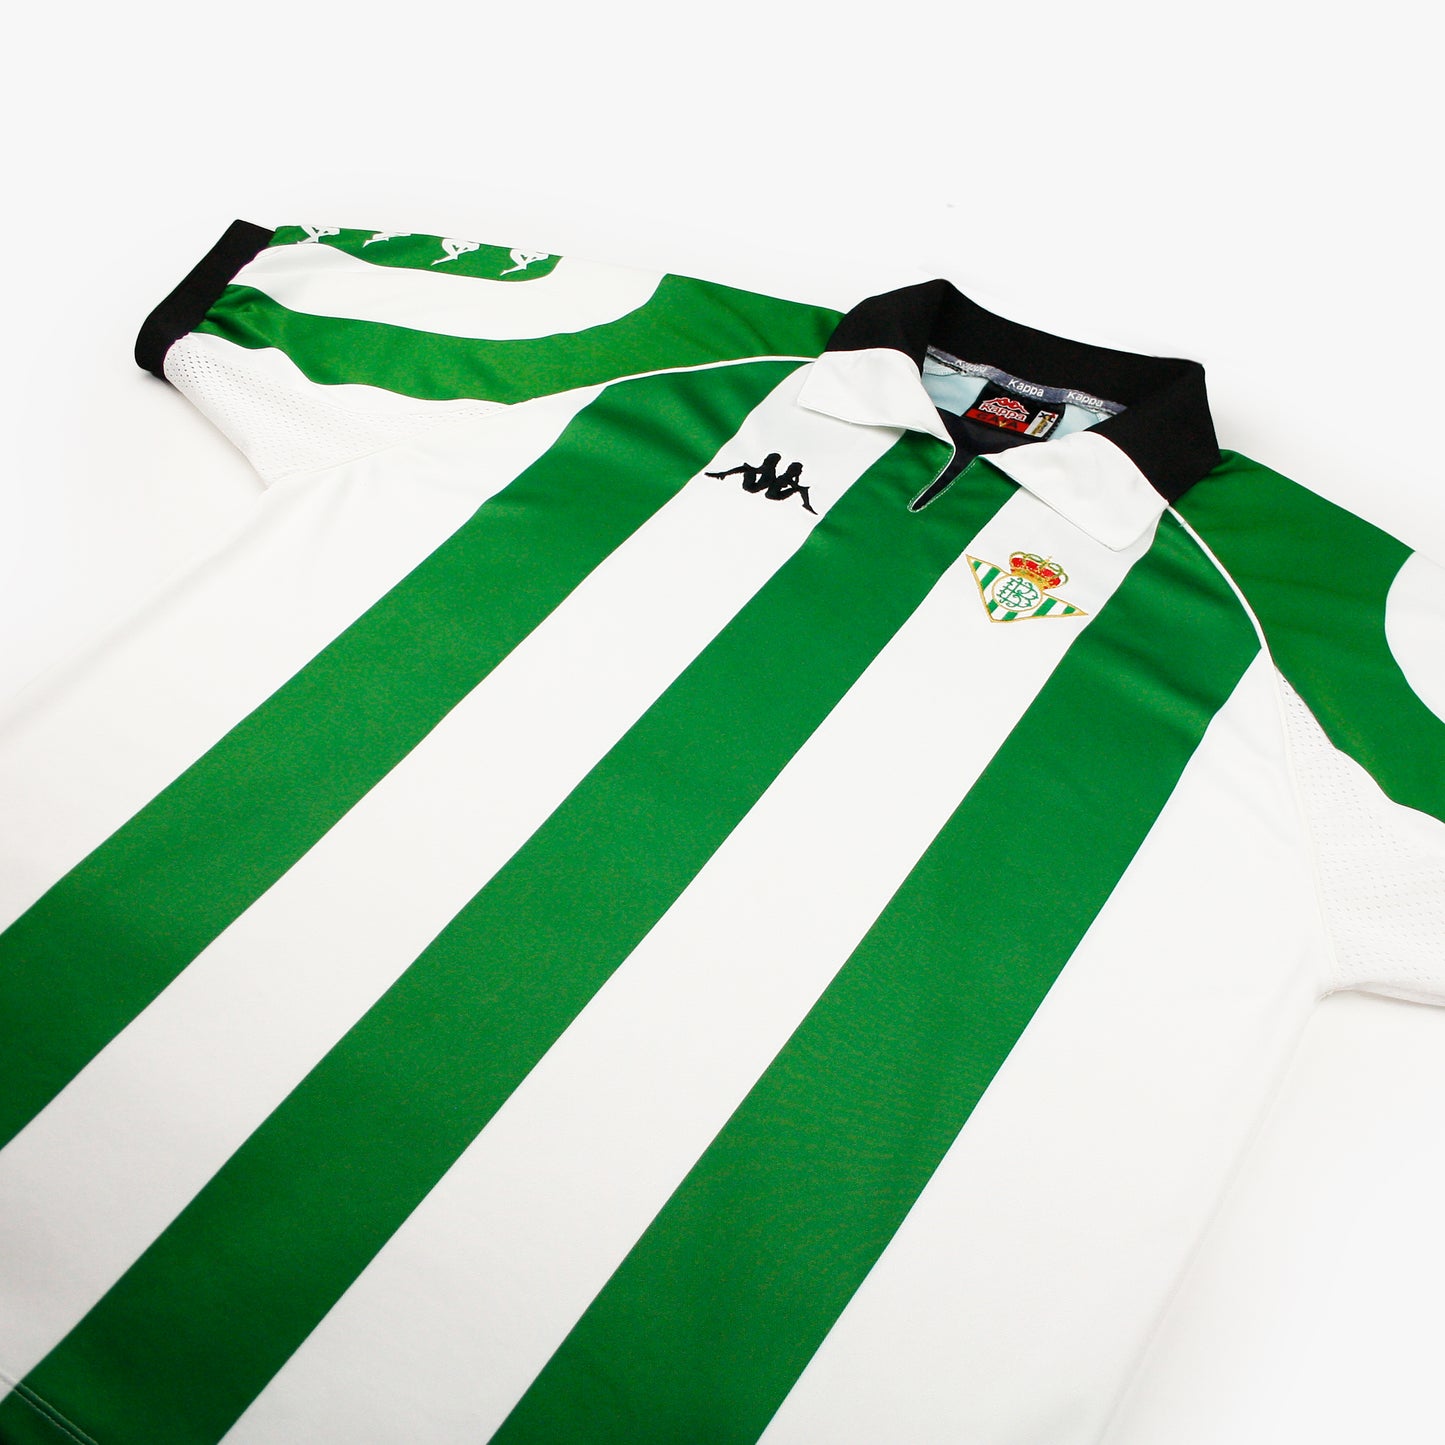 Real Betis 98/99 • Camiseta Local • XL